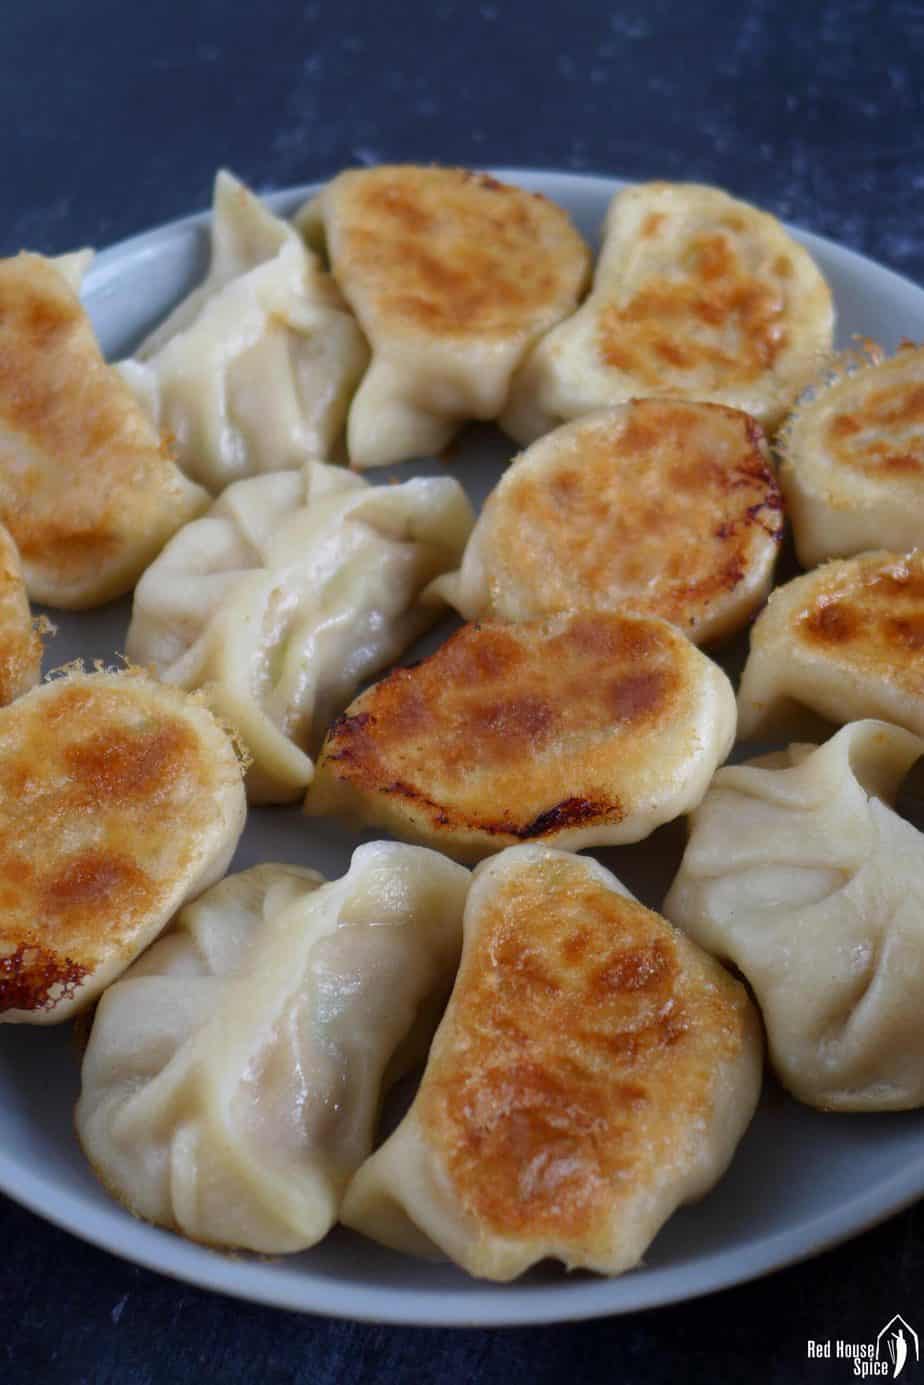 Pan-fried dumplings